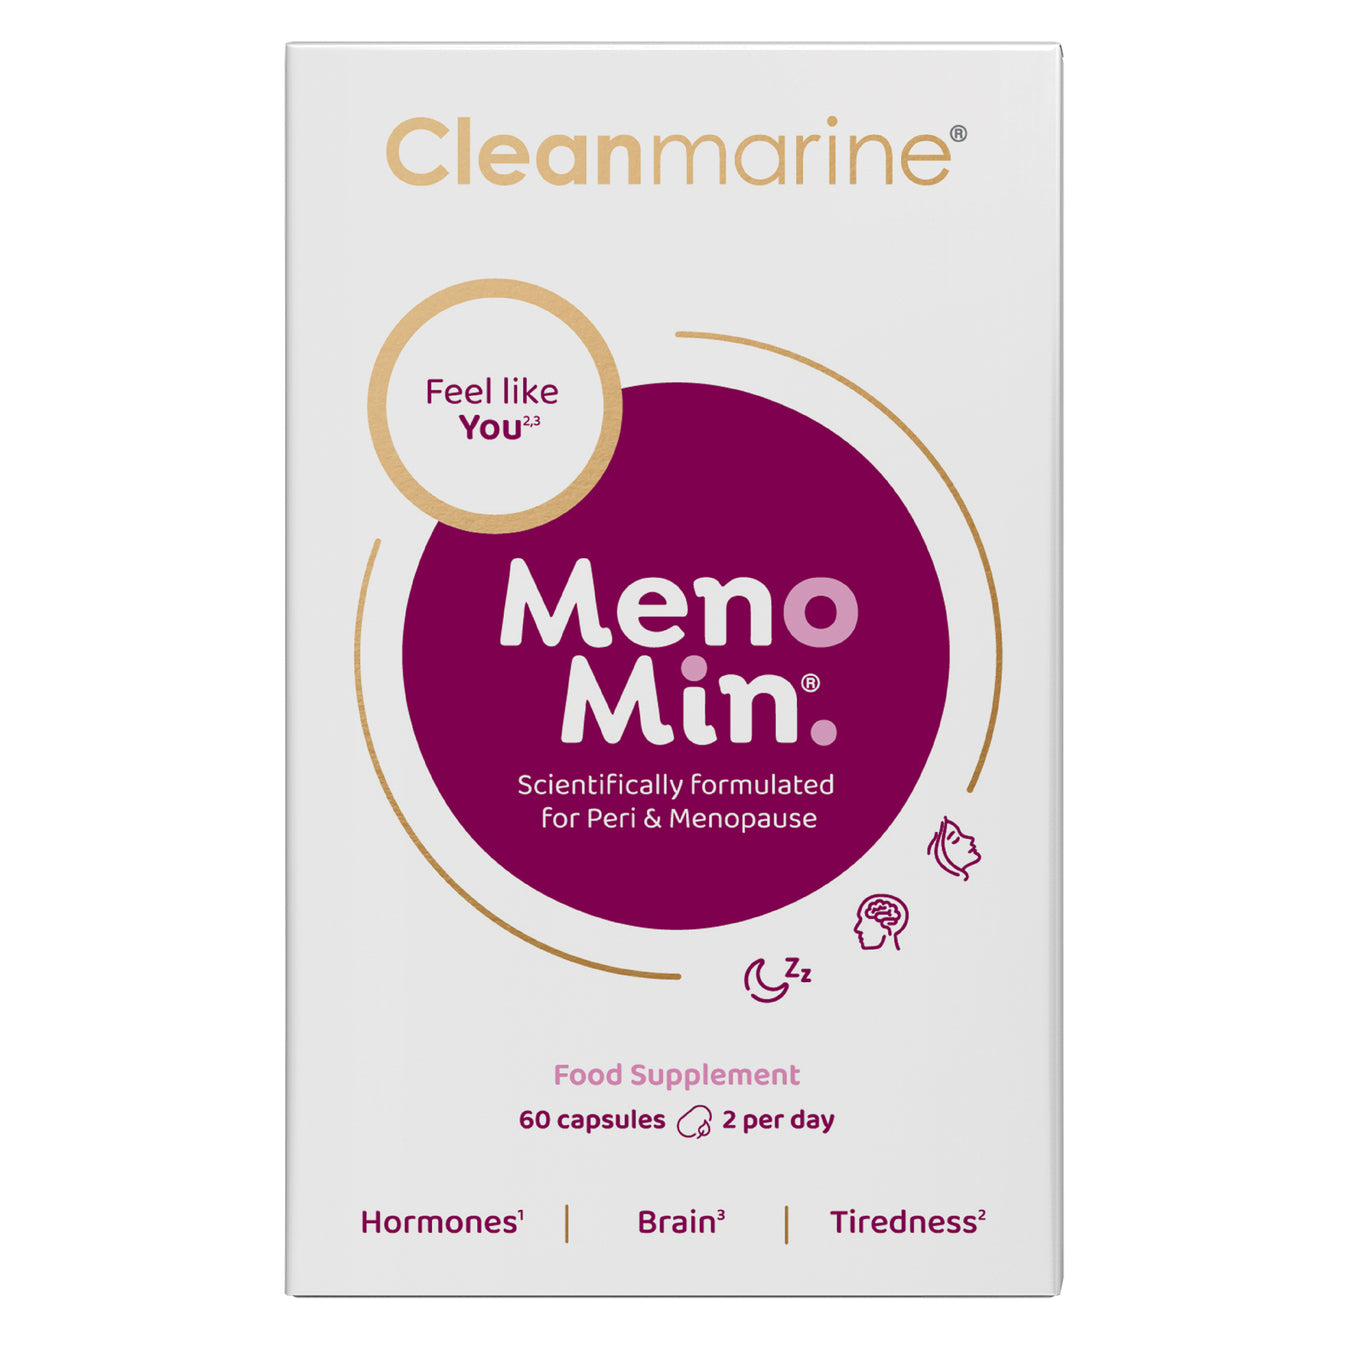 Cleanmarine Women's Health